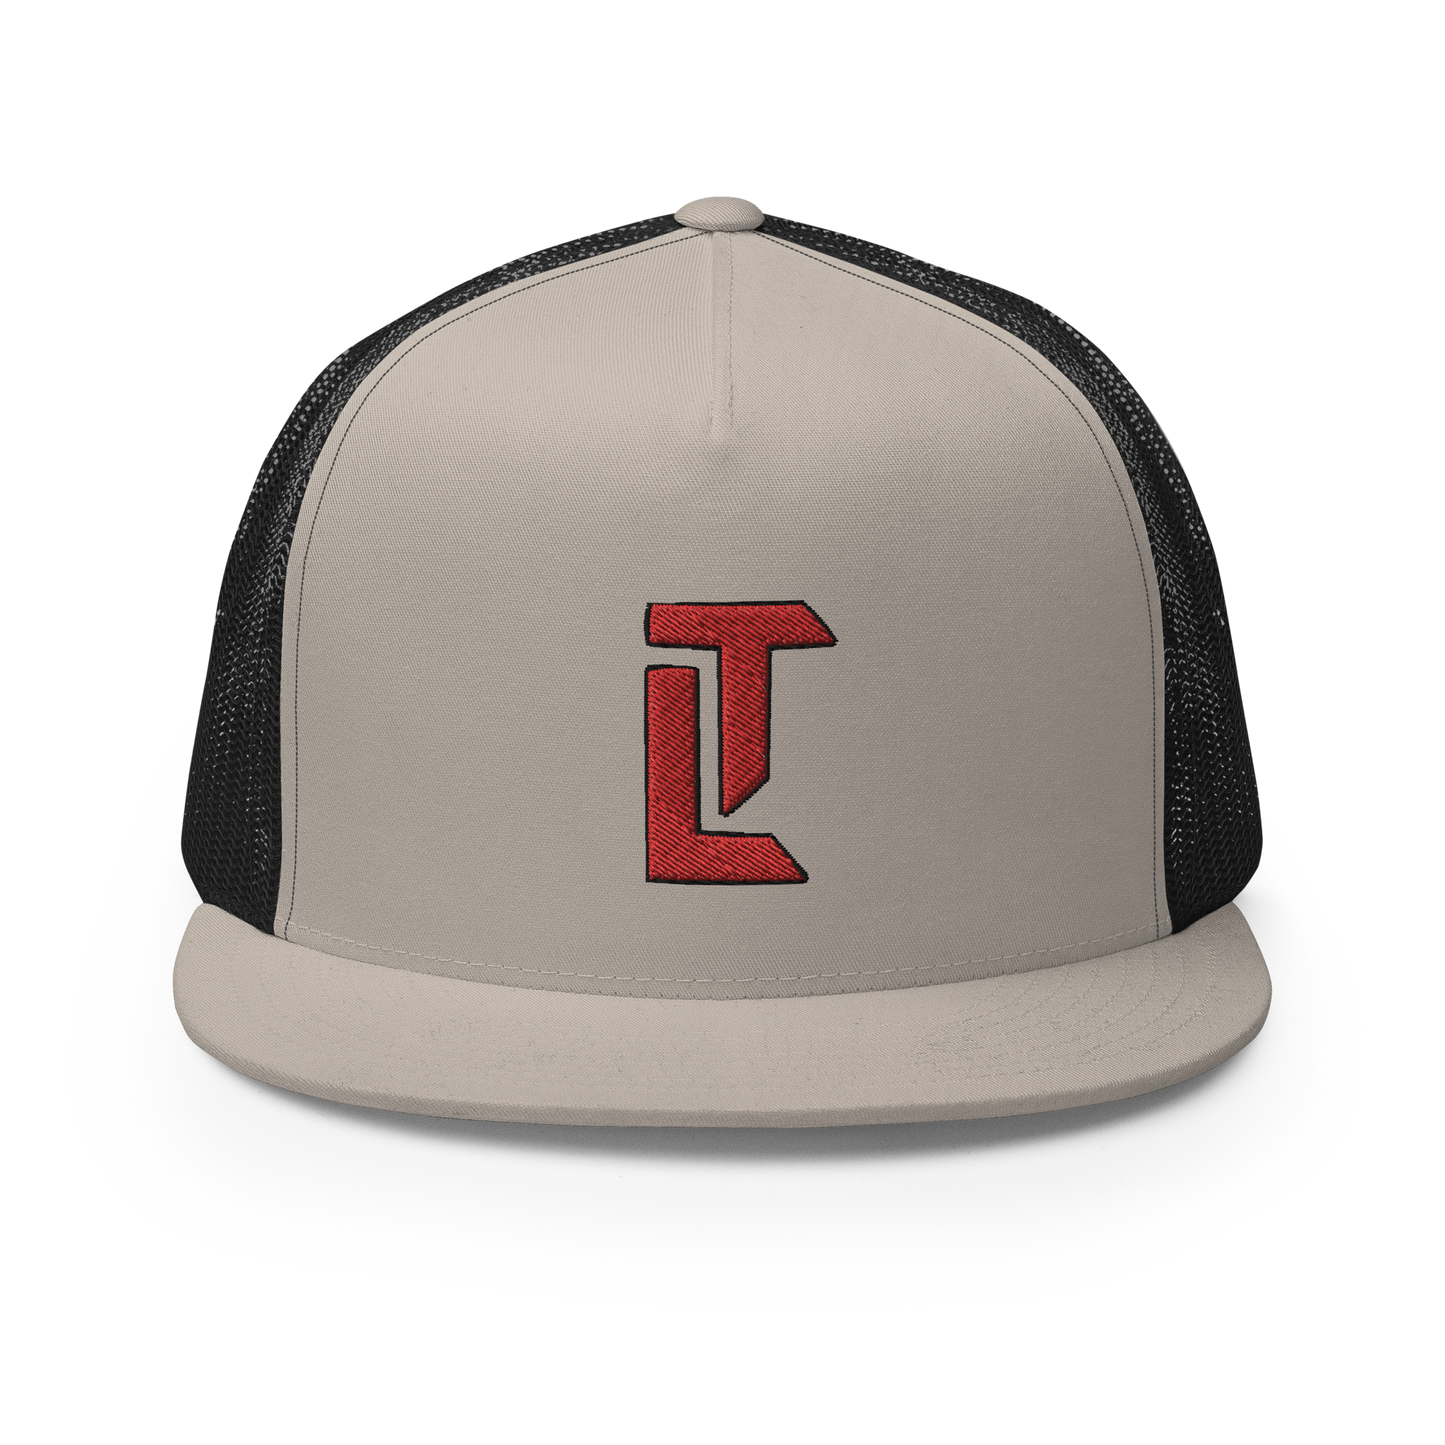 LEX THOMAS TRUCKER CAP